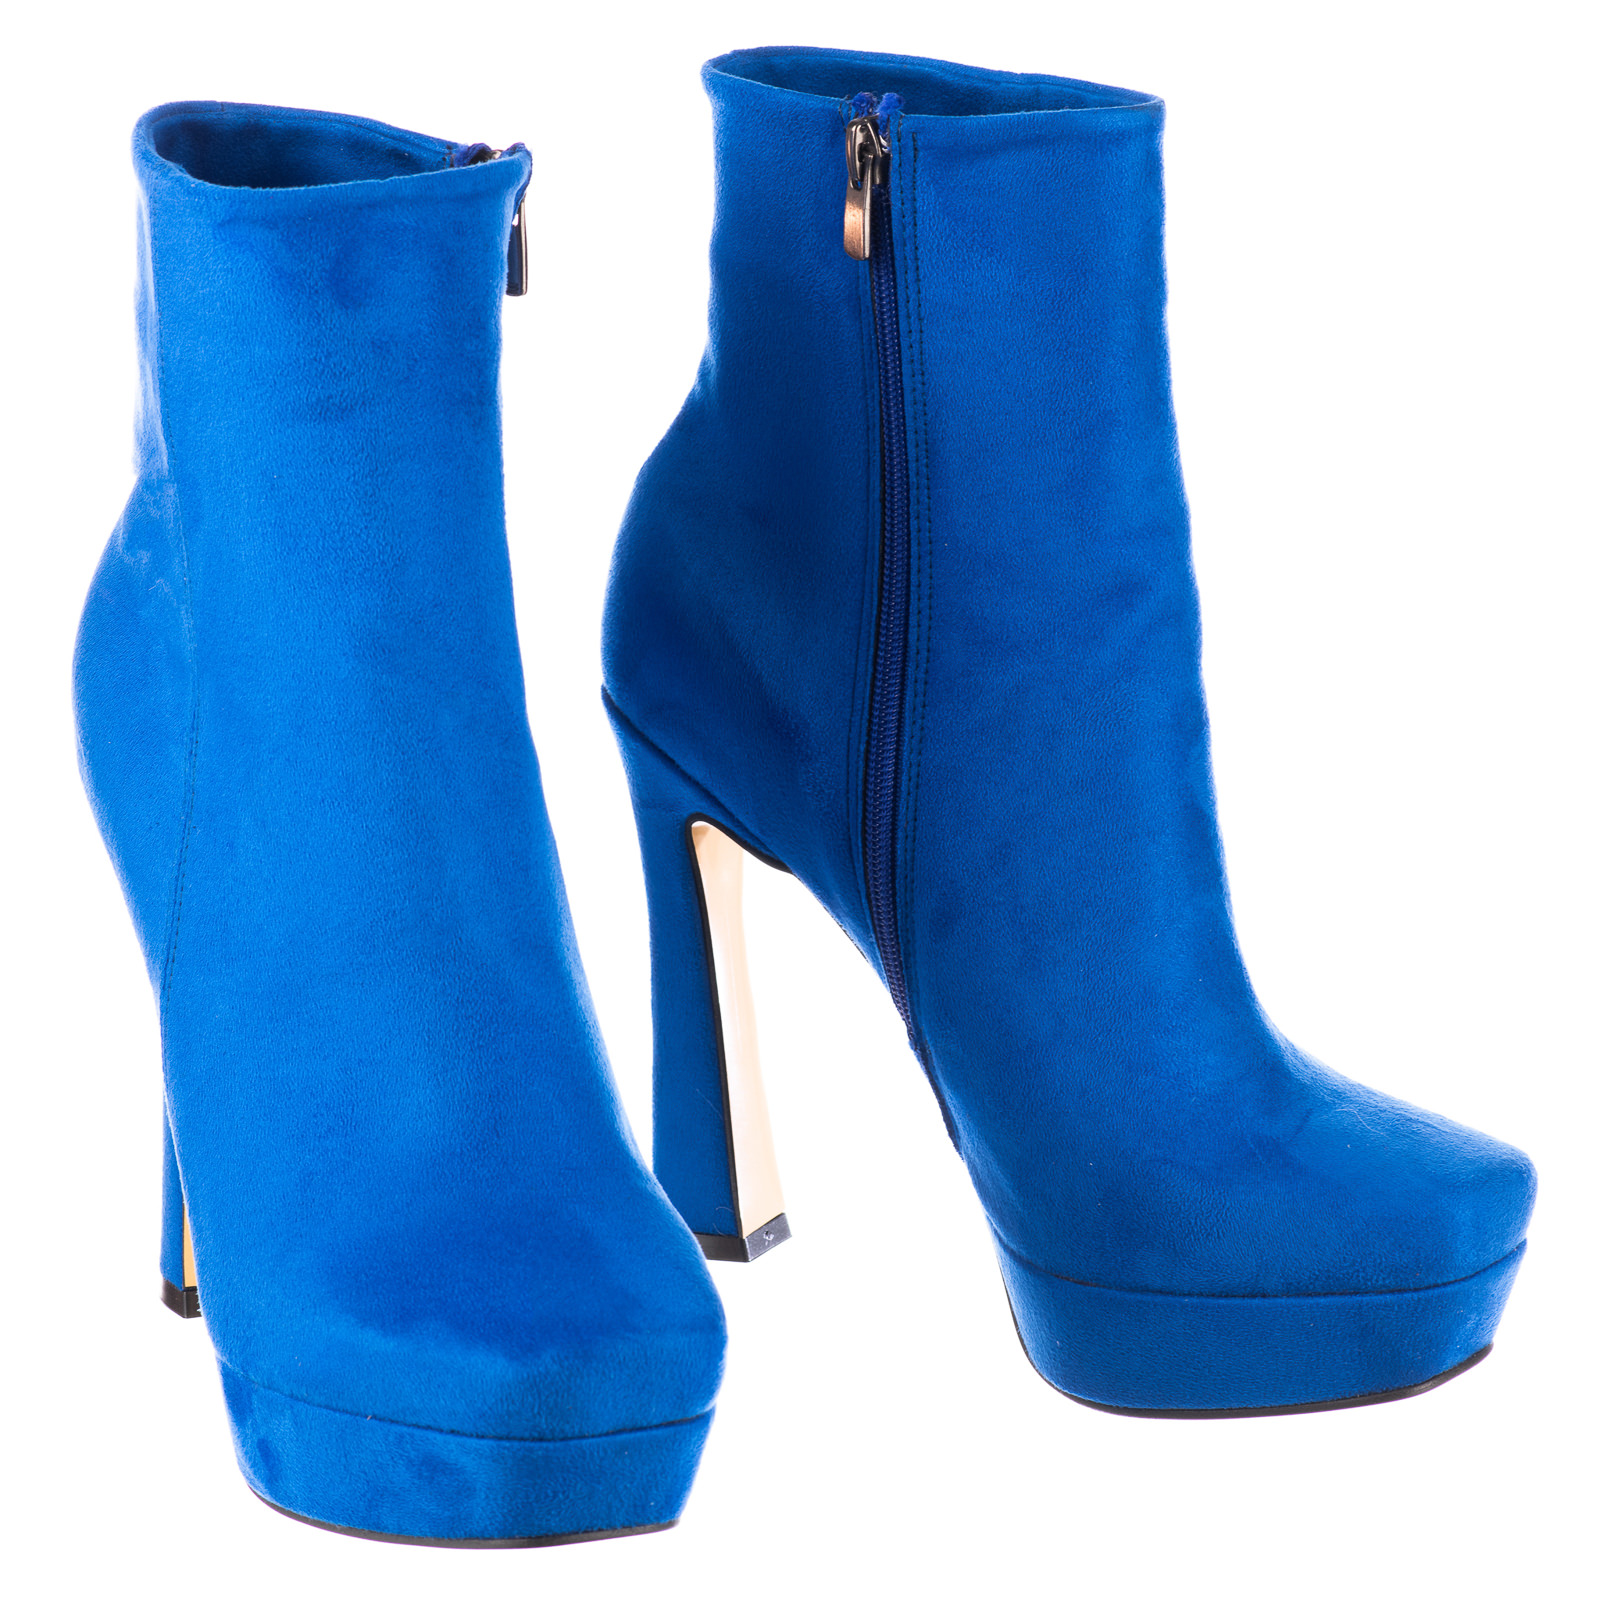 Women ankle boots B656 - BLUE